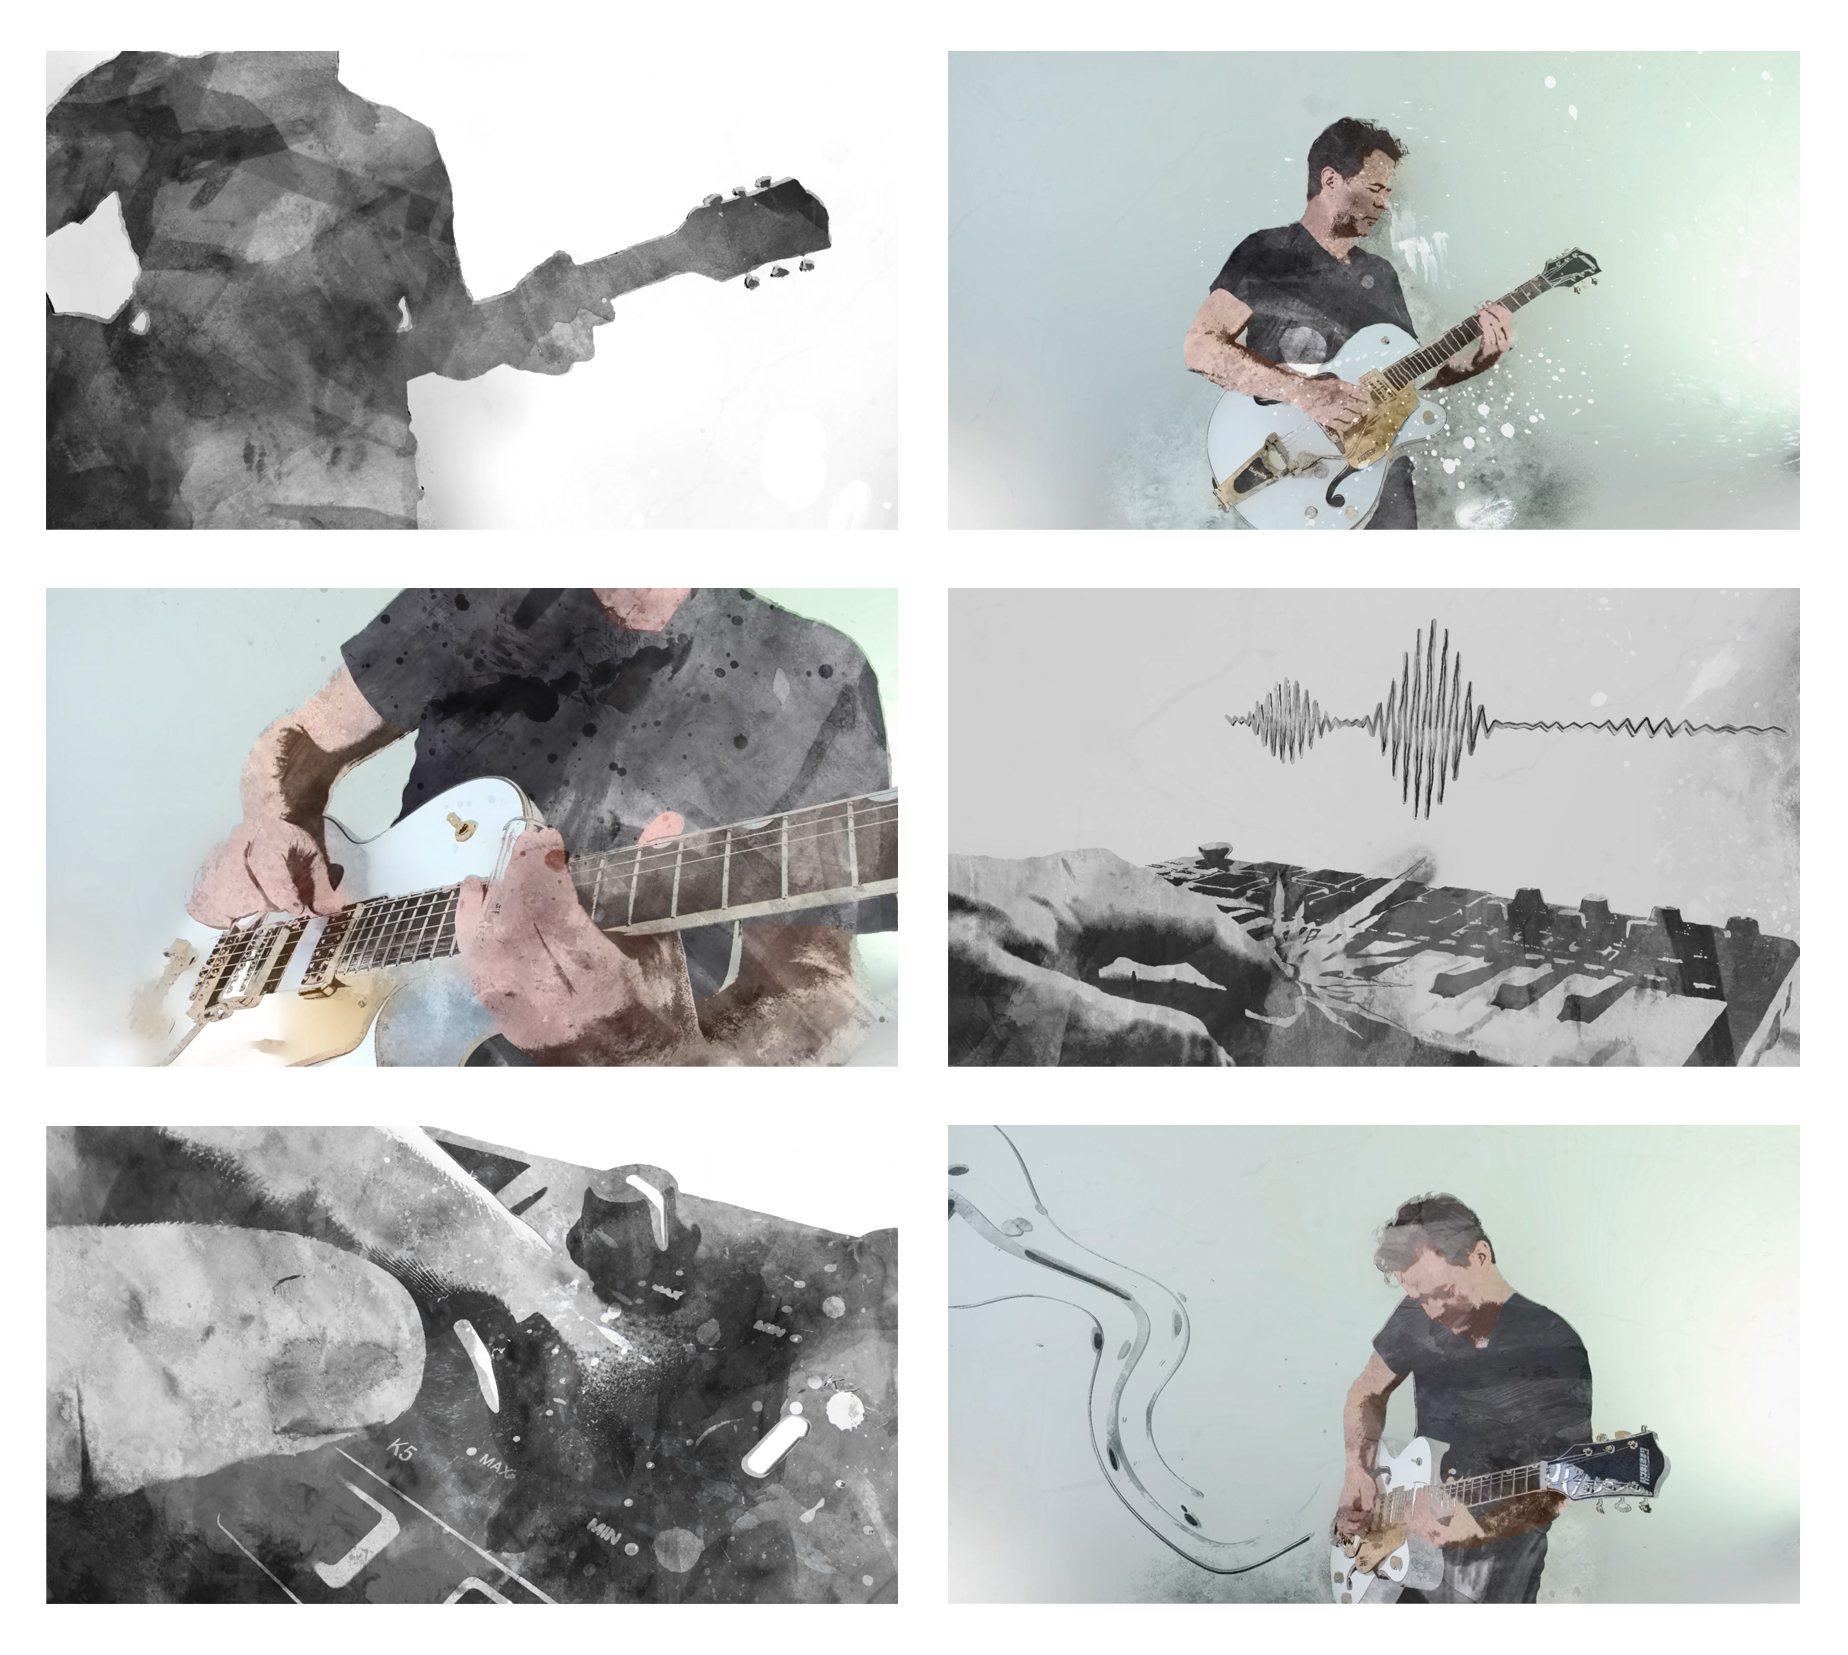 Music video frames from Anthem instrumental